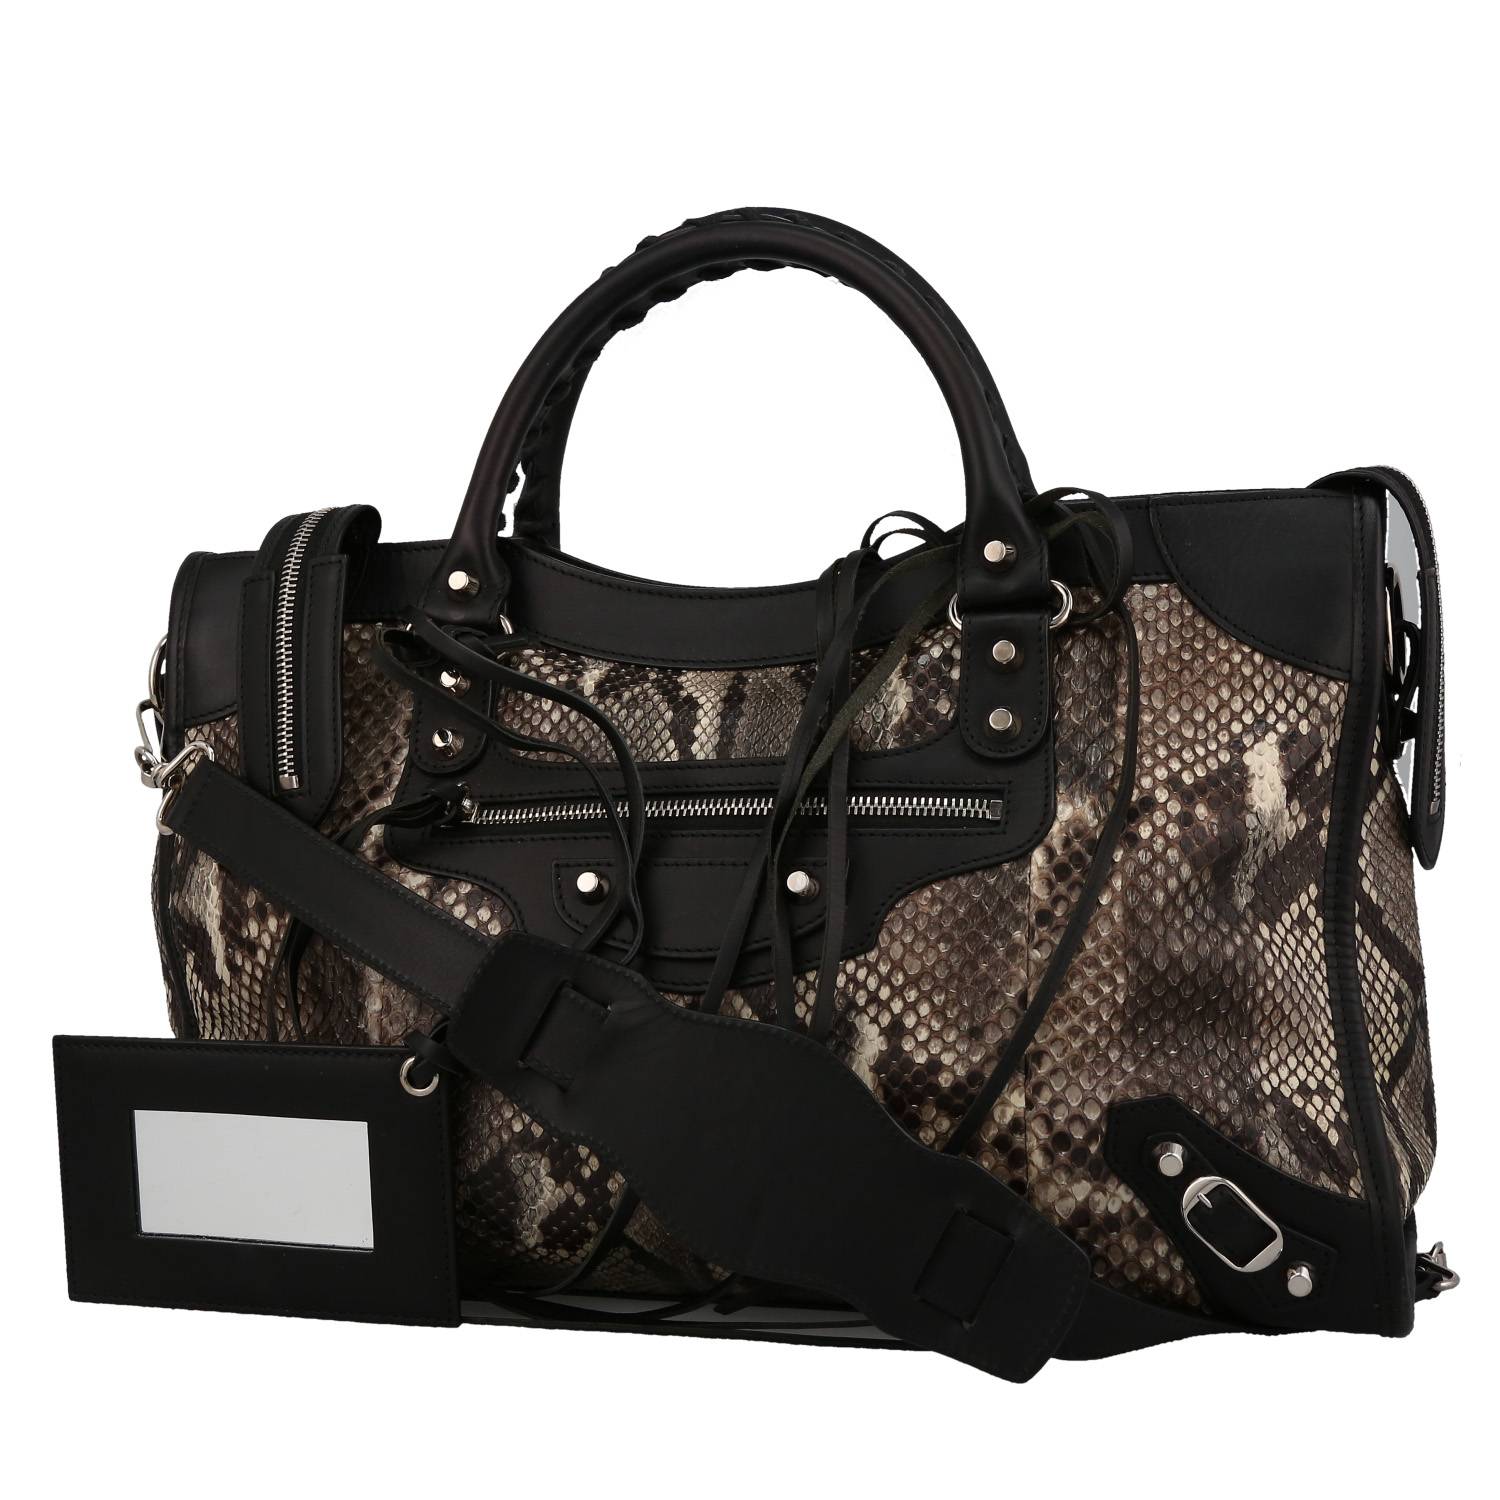 Balenciaga - Authenticated City Handbag - Leather Black for Women, Very Good Condition